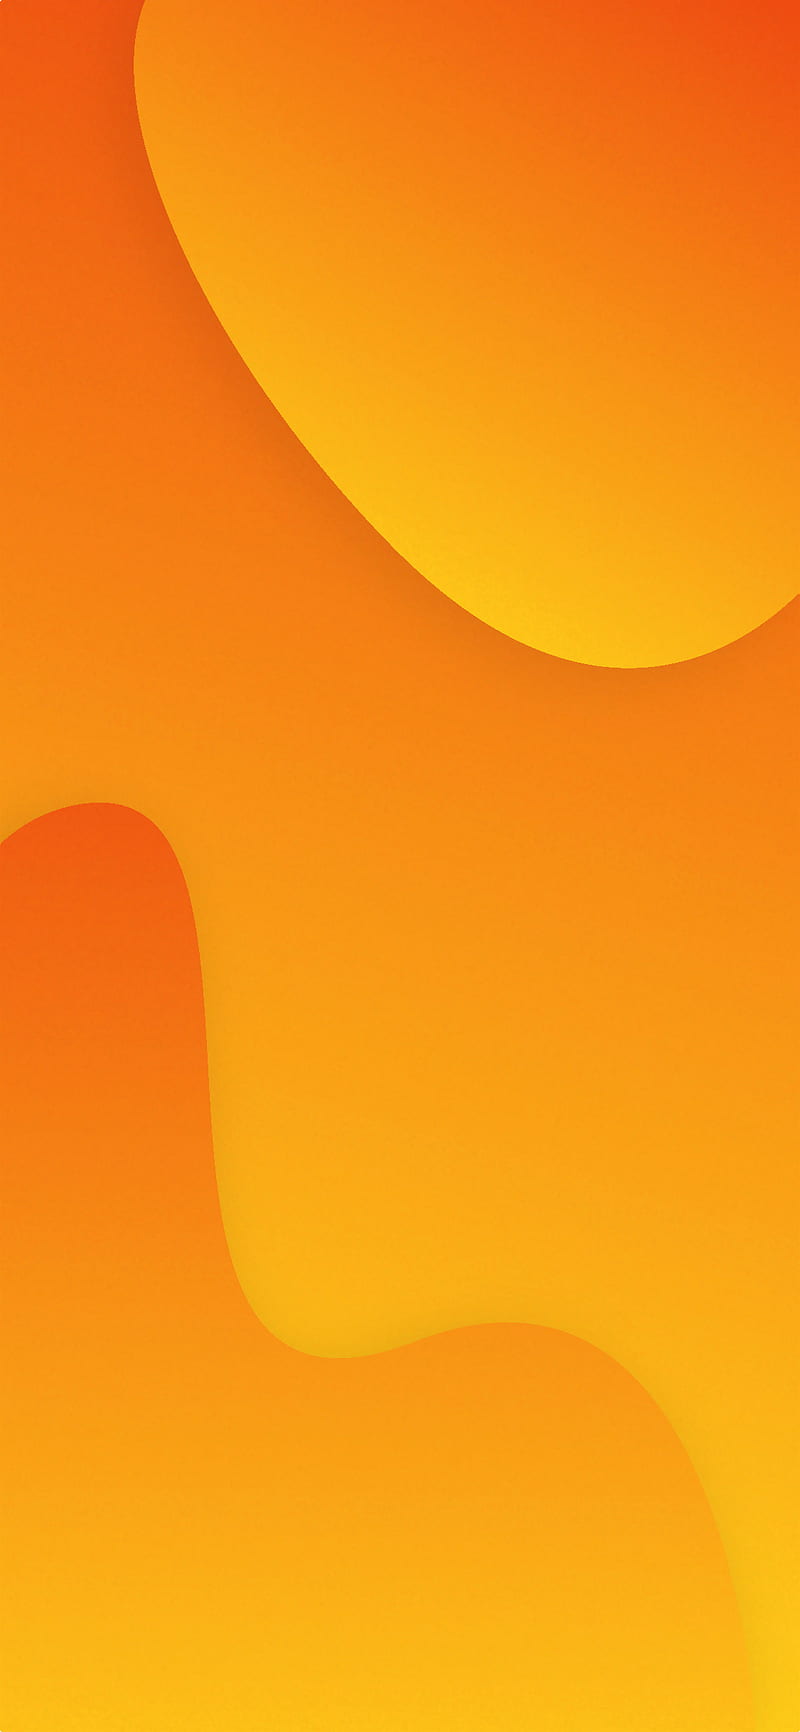 Orange wallpaper Vectors  Illustrations for Free Download  Freepik